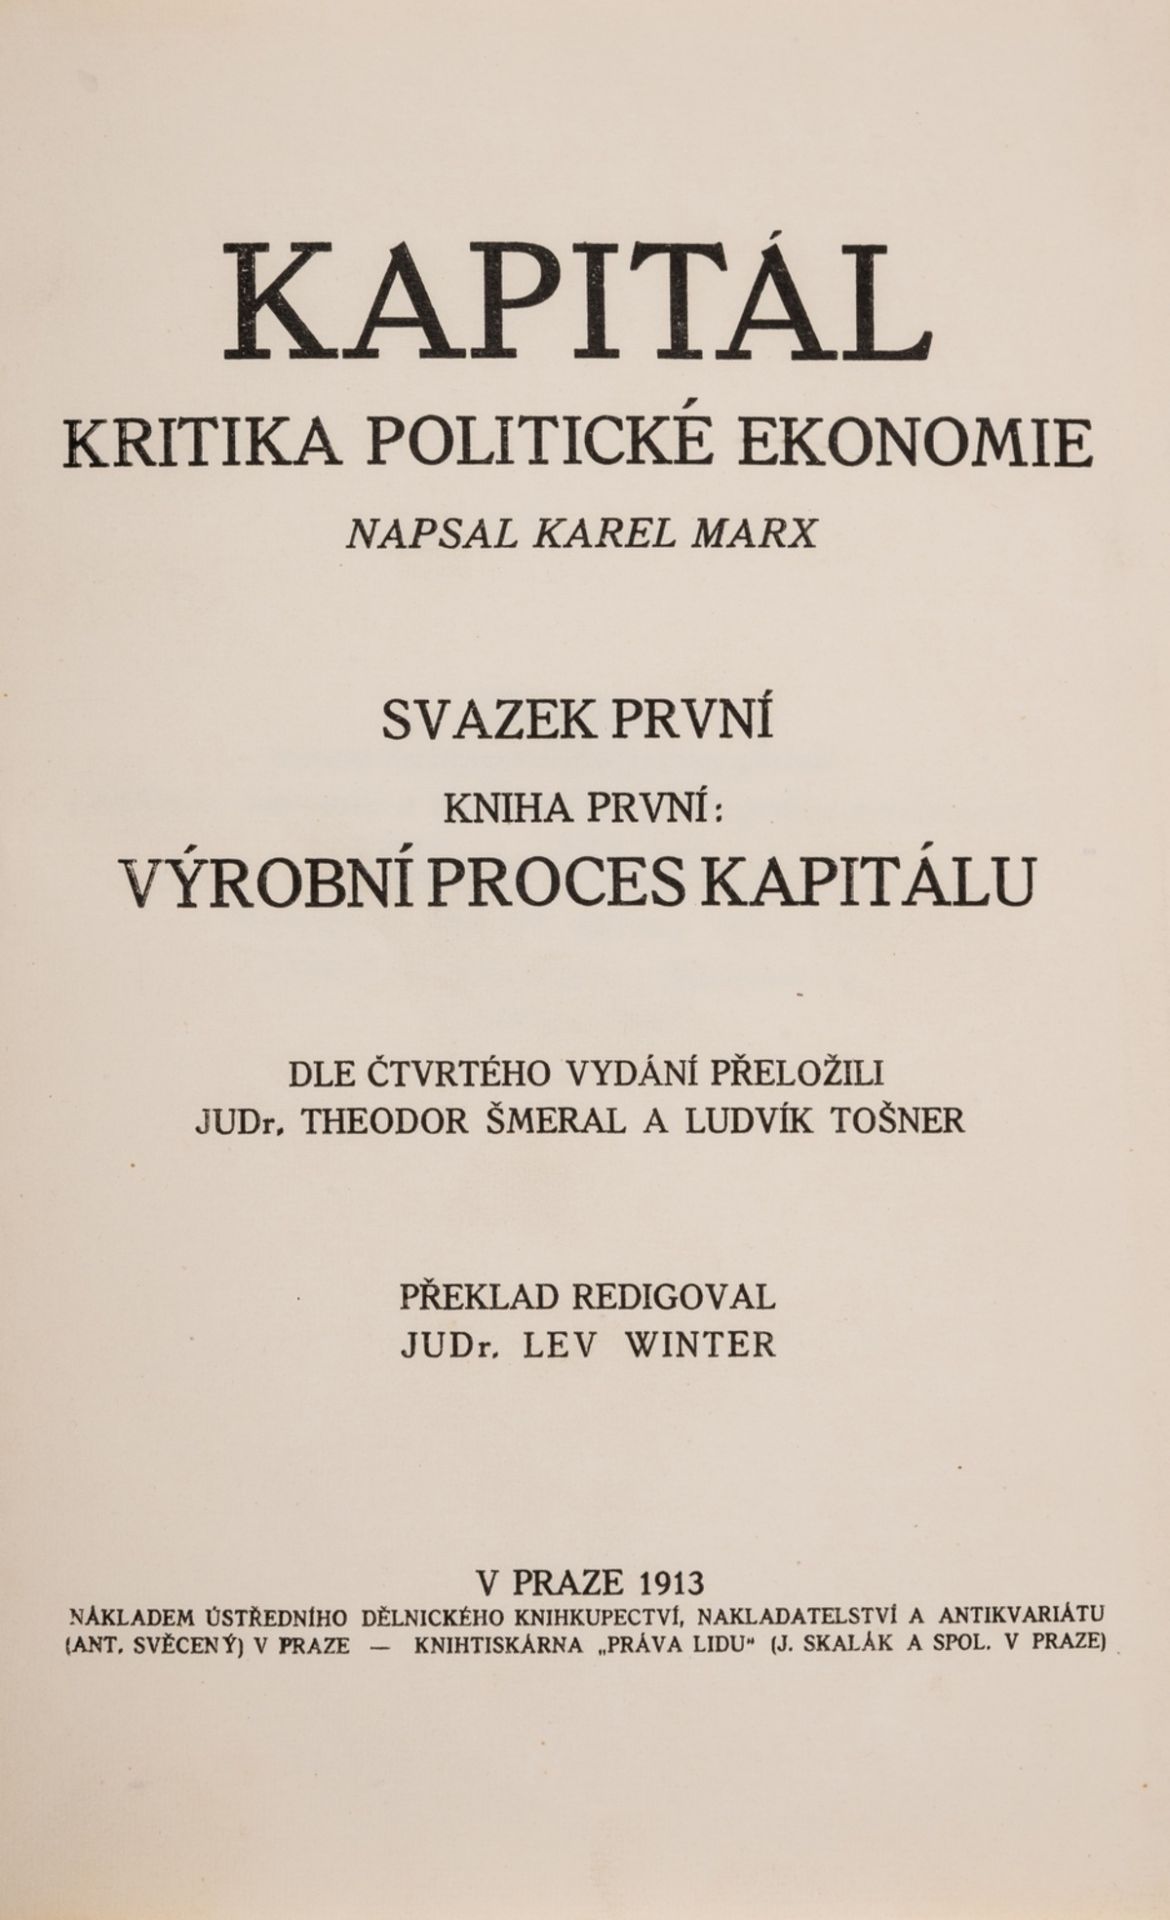 Marx (Karl) Kapitál: Kritika Politické Ekonomie, first Czech edition, Prague, 1913.